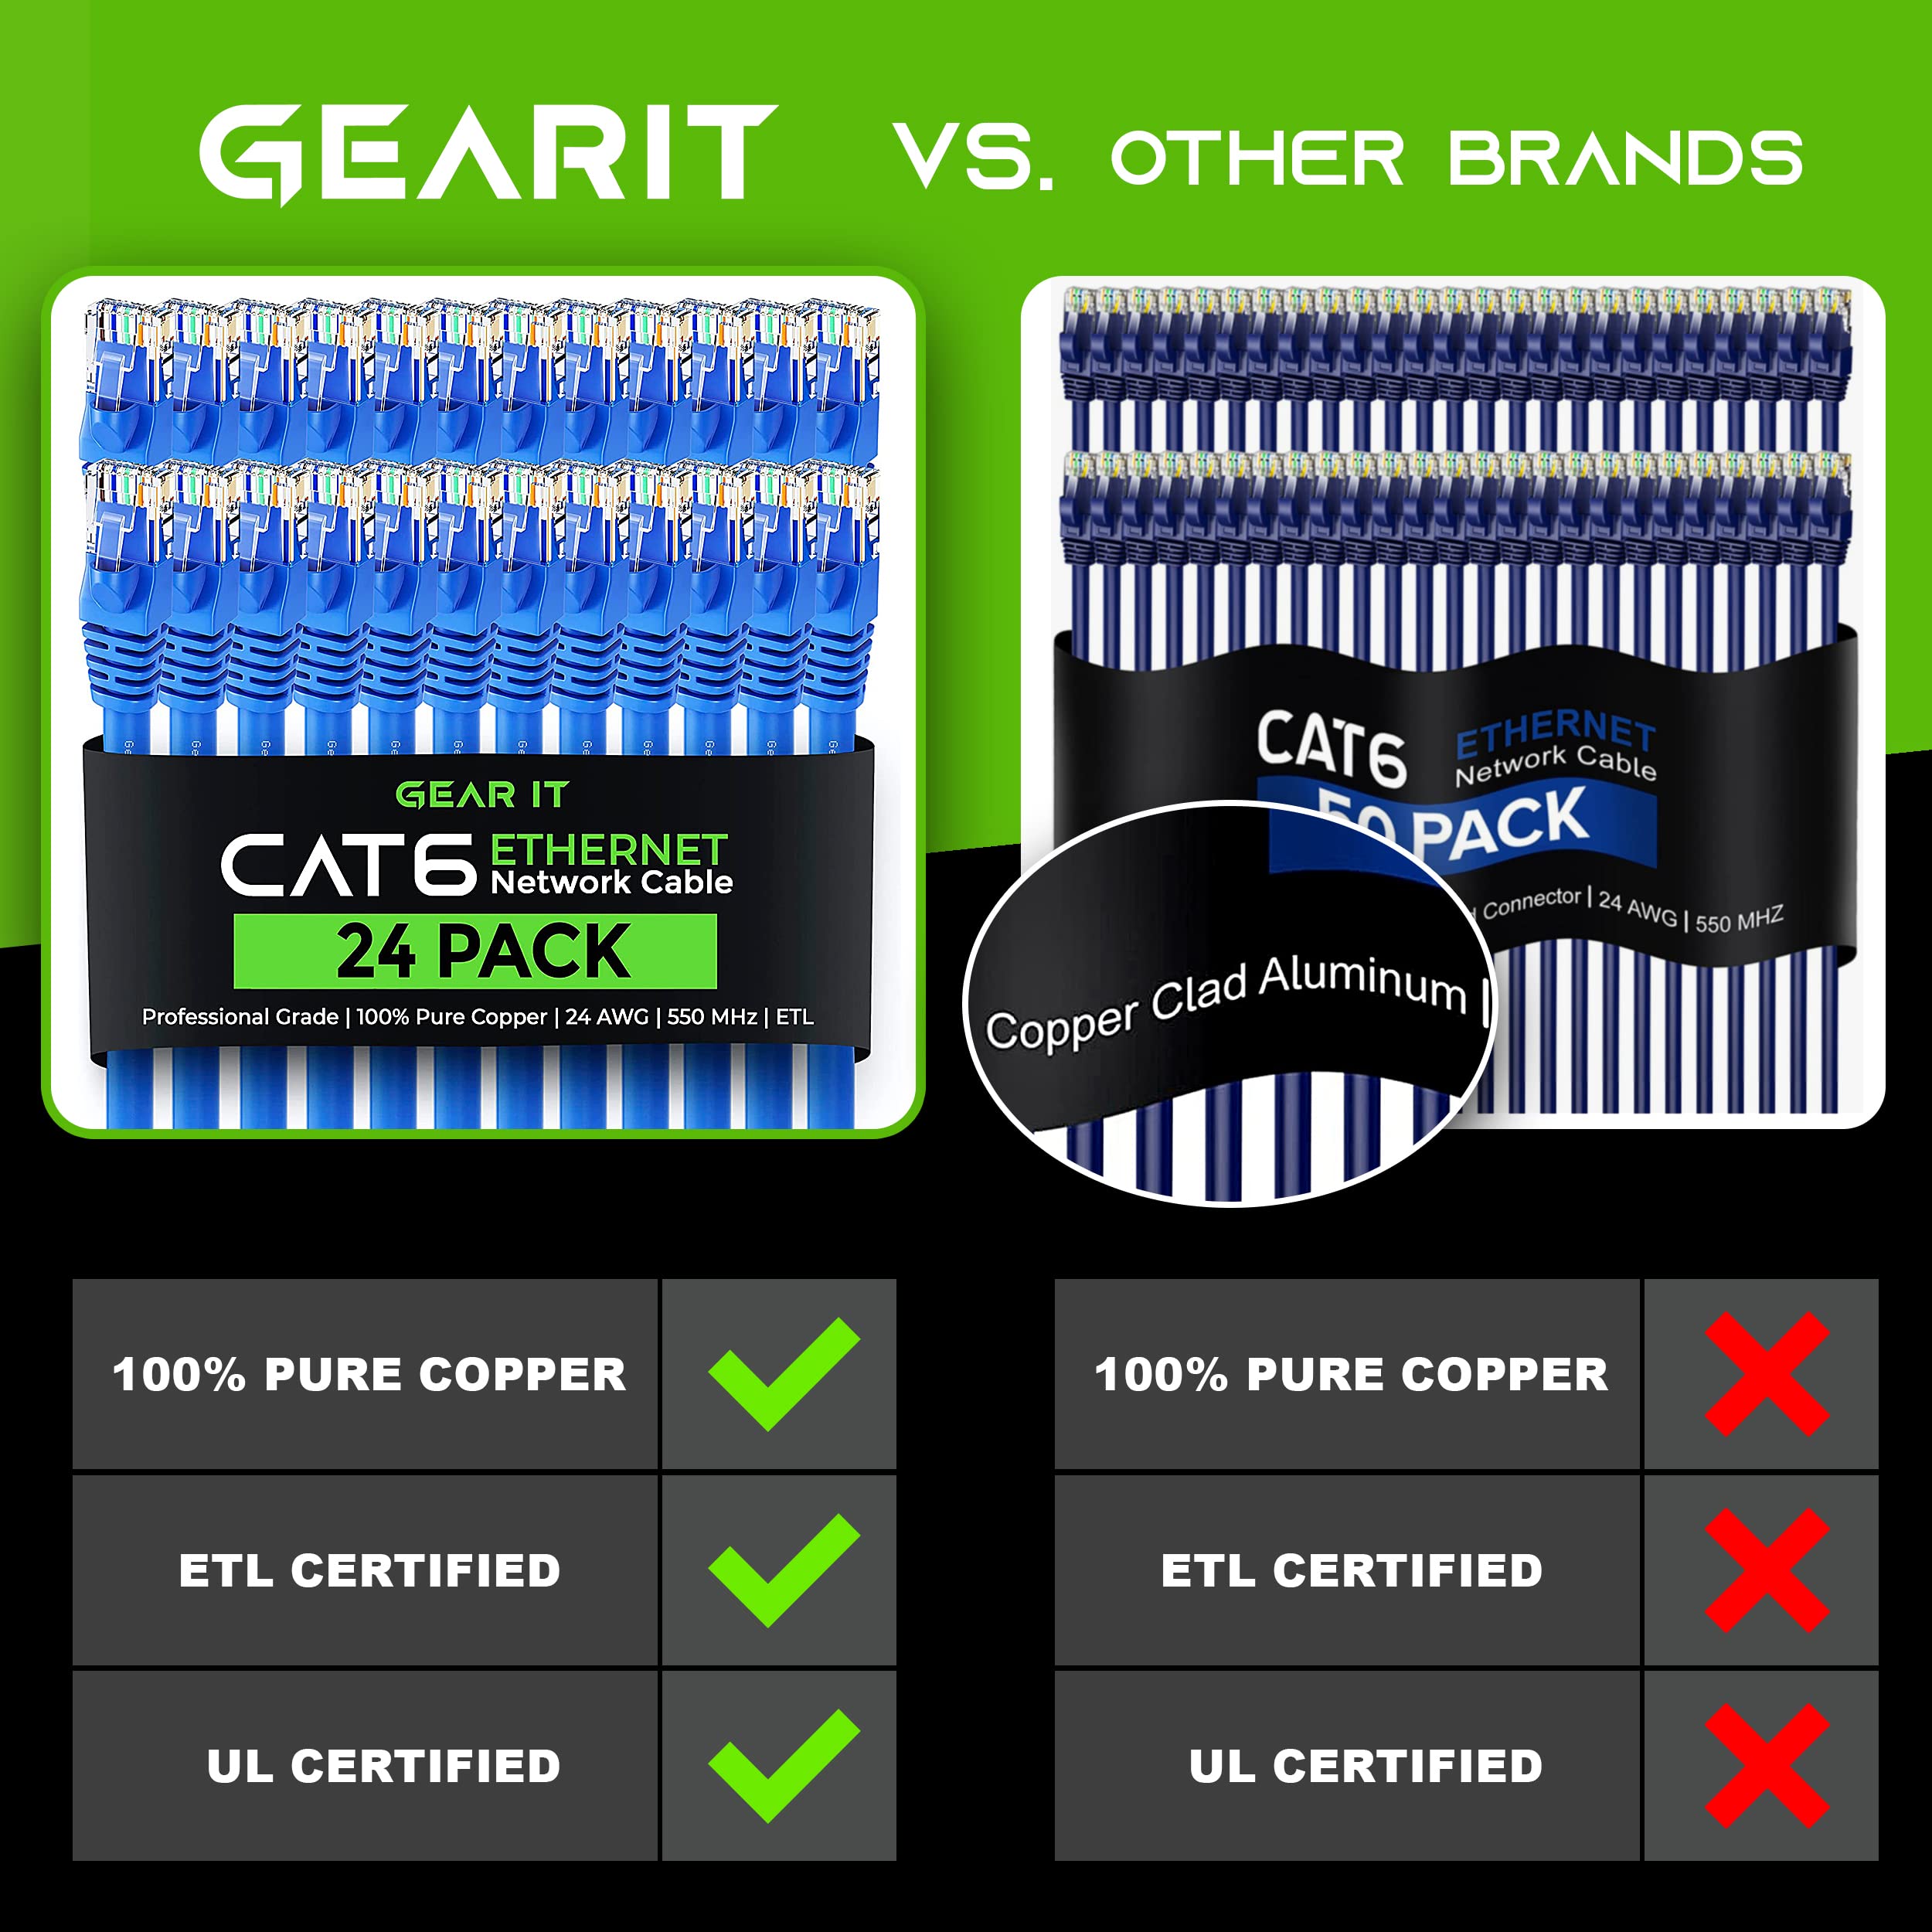 GearIT Cat 6 Ethernet Cable 15 ft (10-Pack) - Cat6 Patch Cable, Cat 6 Patch Cable, Cat6 Cable, Cat 6 Cable, Cat6 Ethernet Cable, Network Cable, Internet Cable - Blue 15 Feet